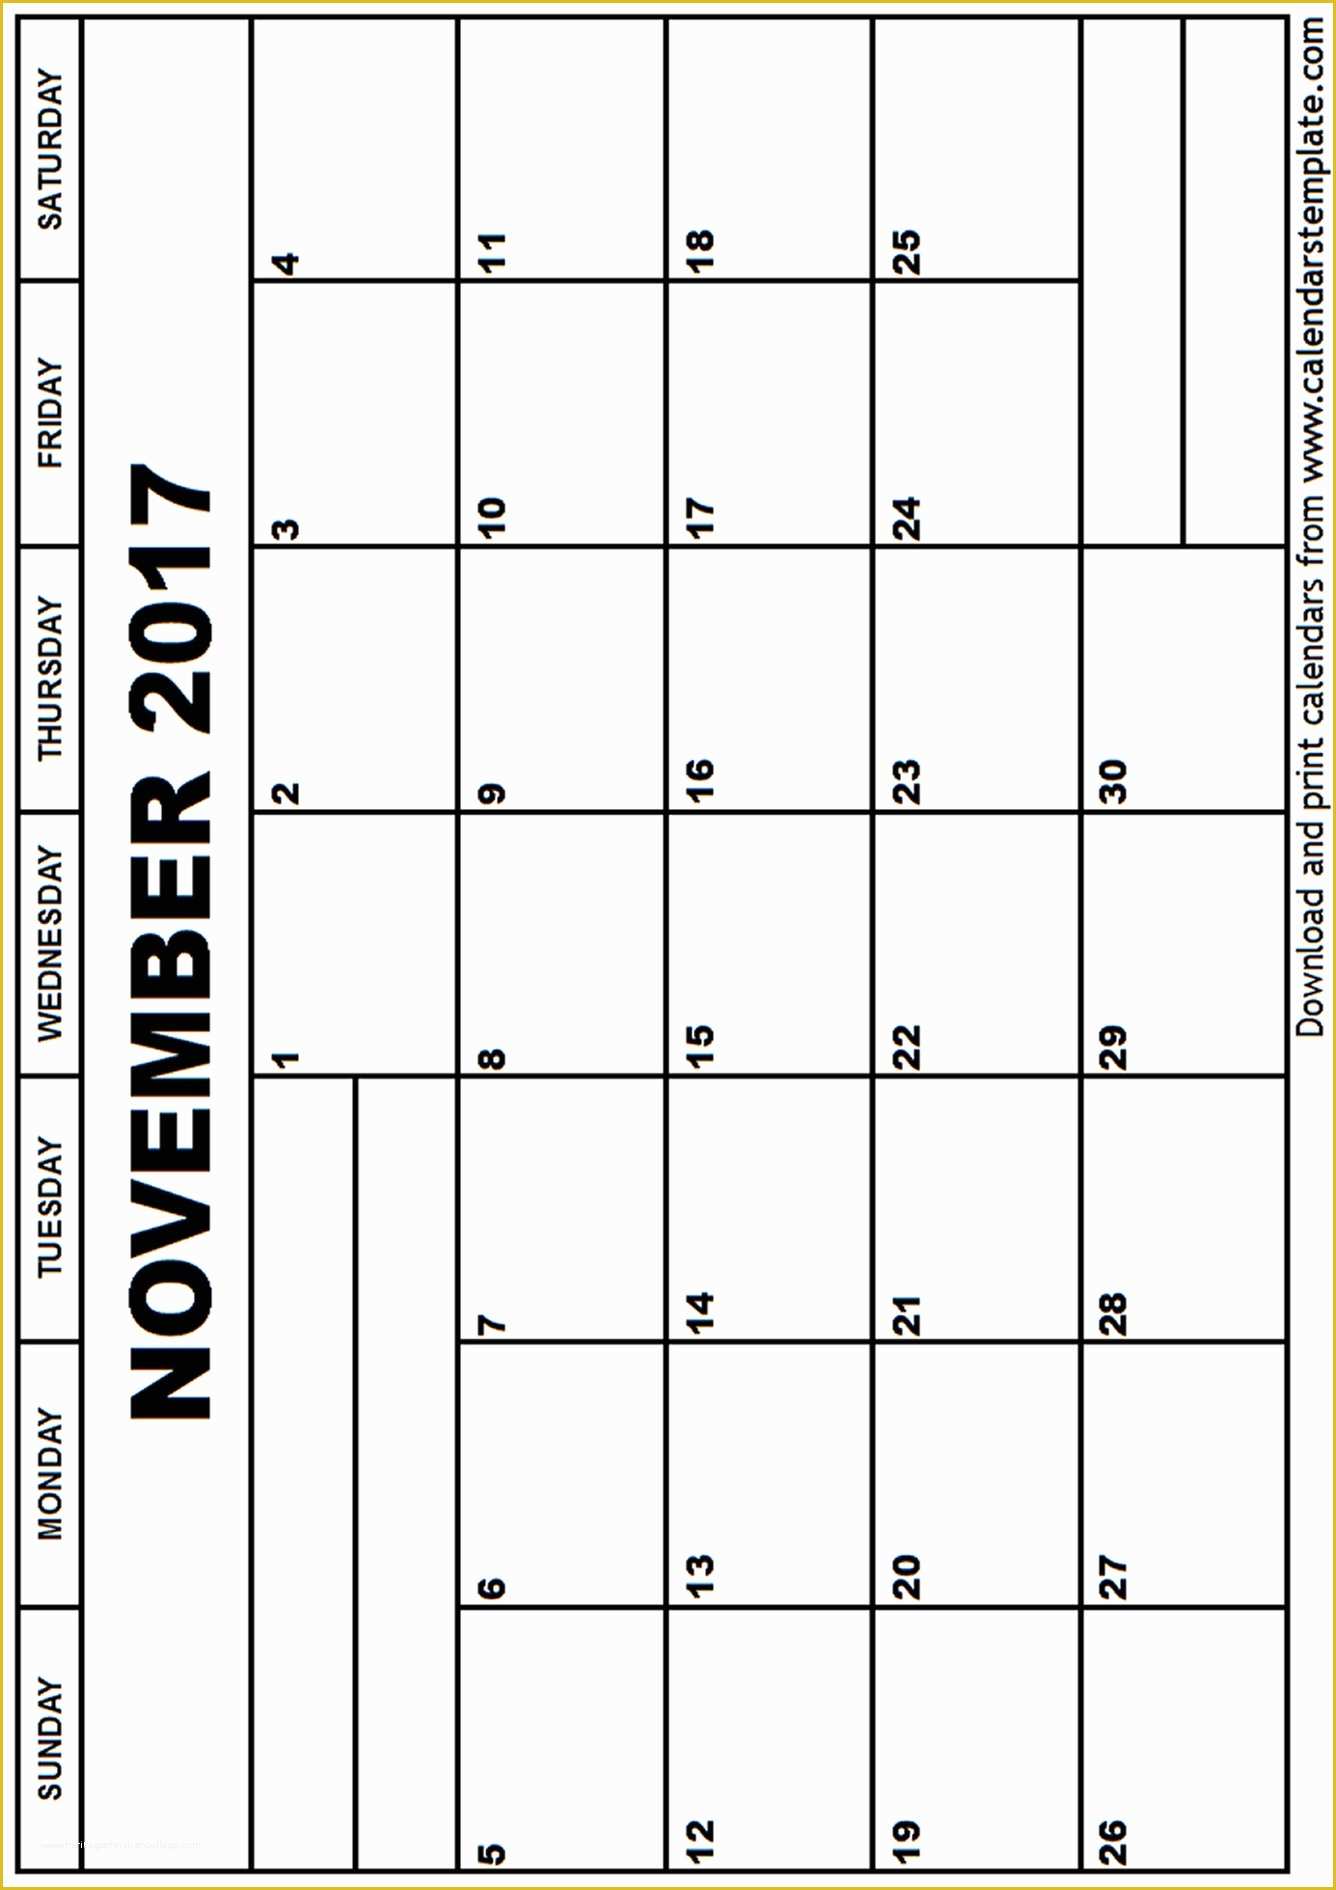 Free Calendar Template 2017 November Of November 2017 Calendar Template